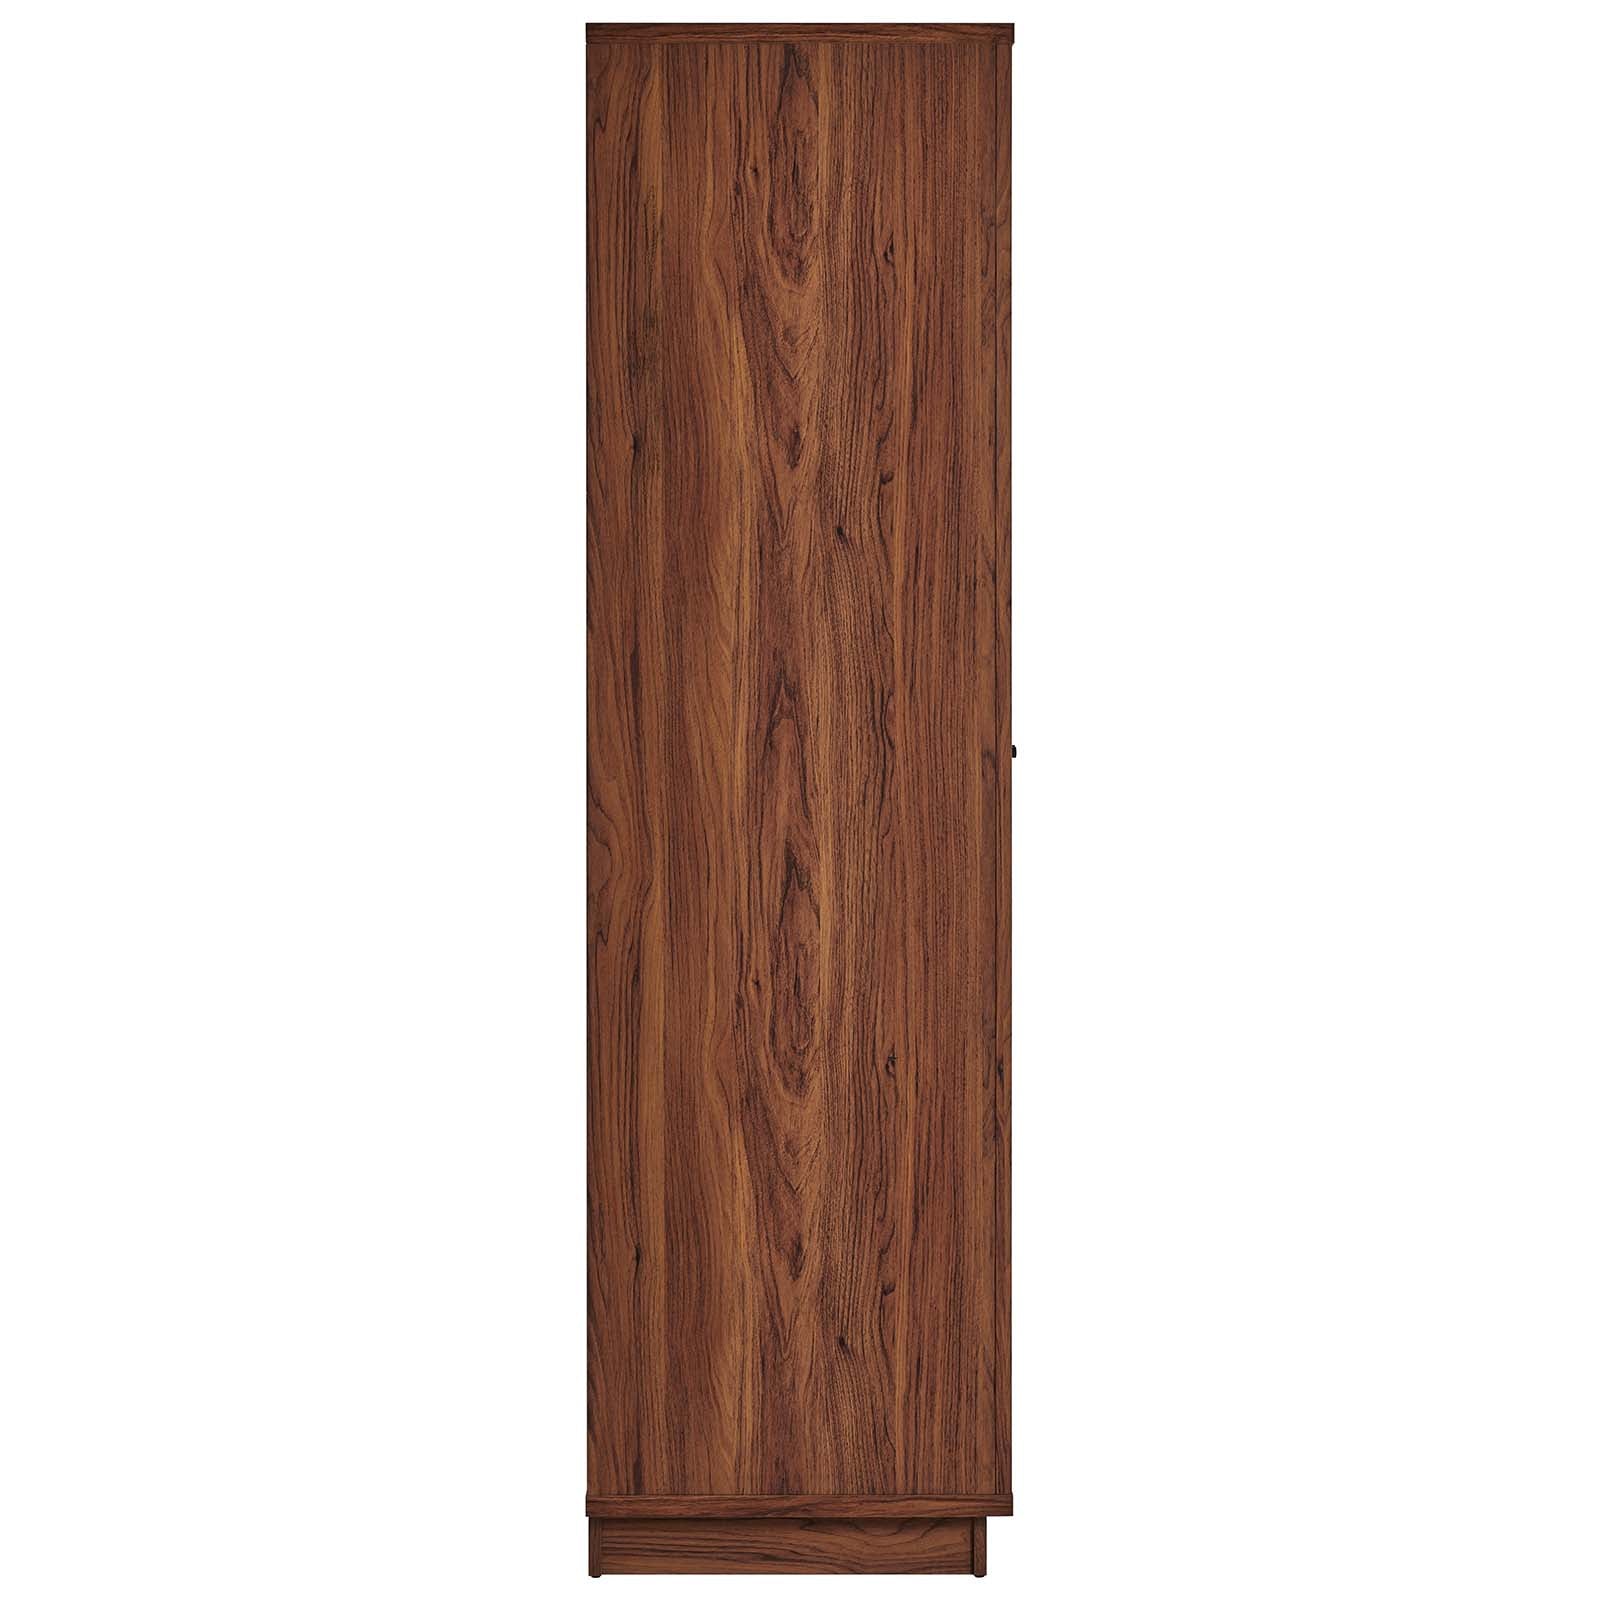 Capri 70" Tall Wood Grain Storage Cabinet - East Shore Modern Home Furnishings